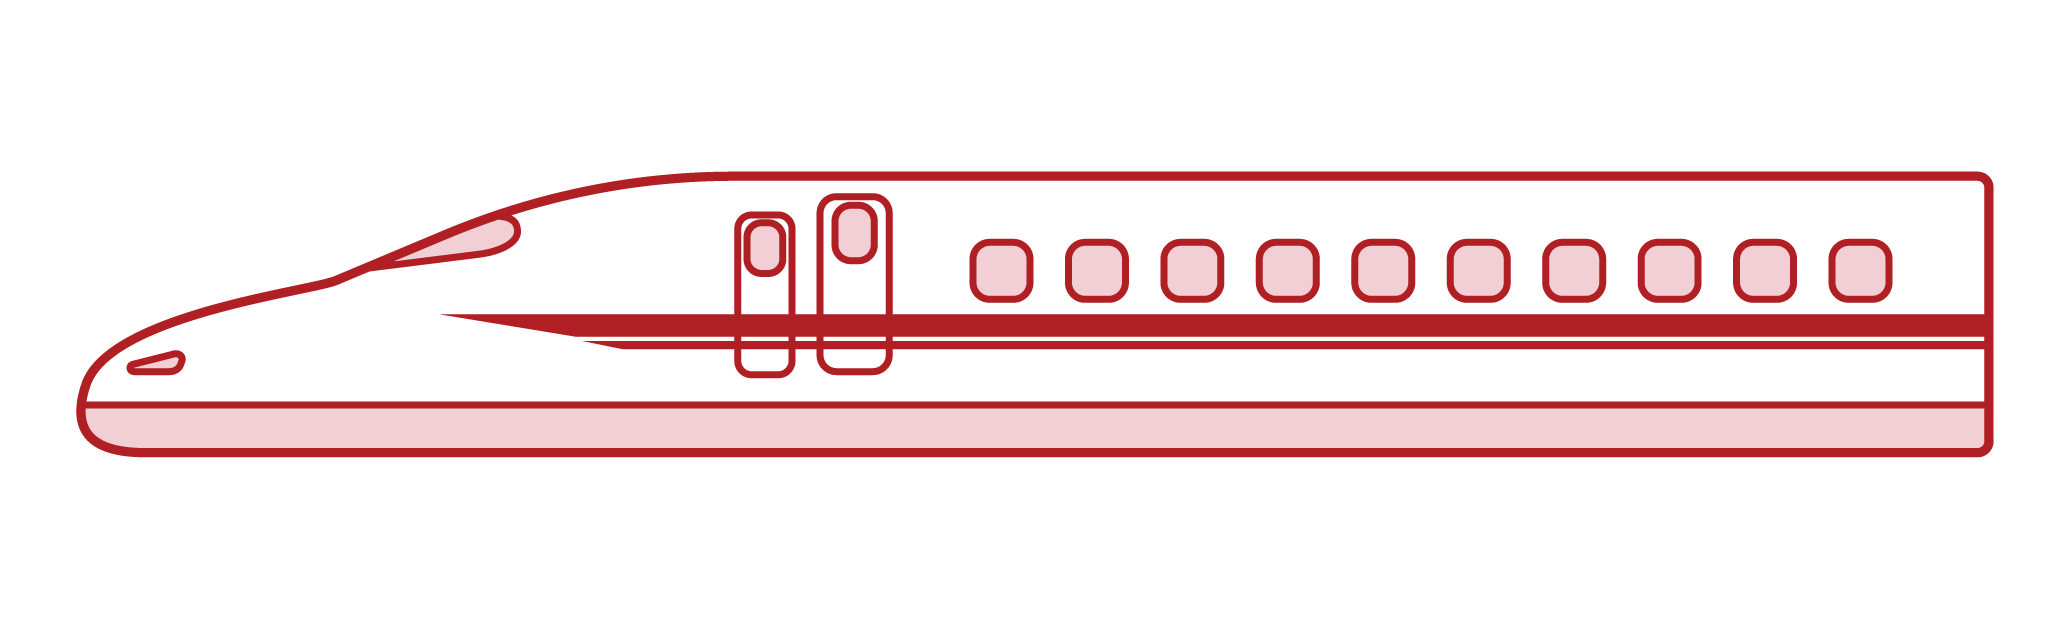 Illustration of Shinkansen